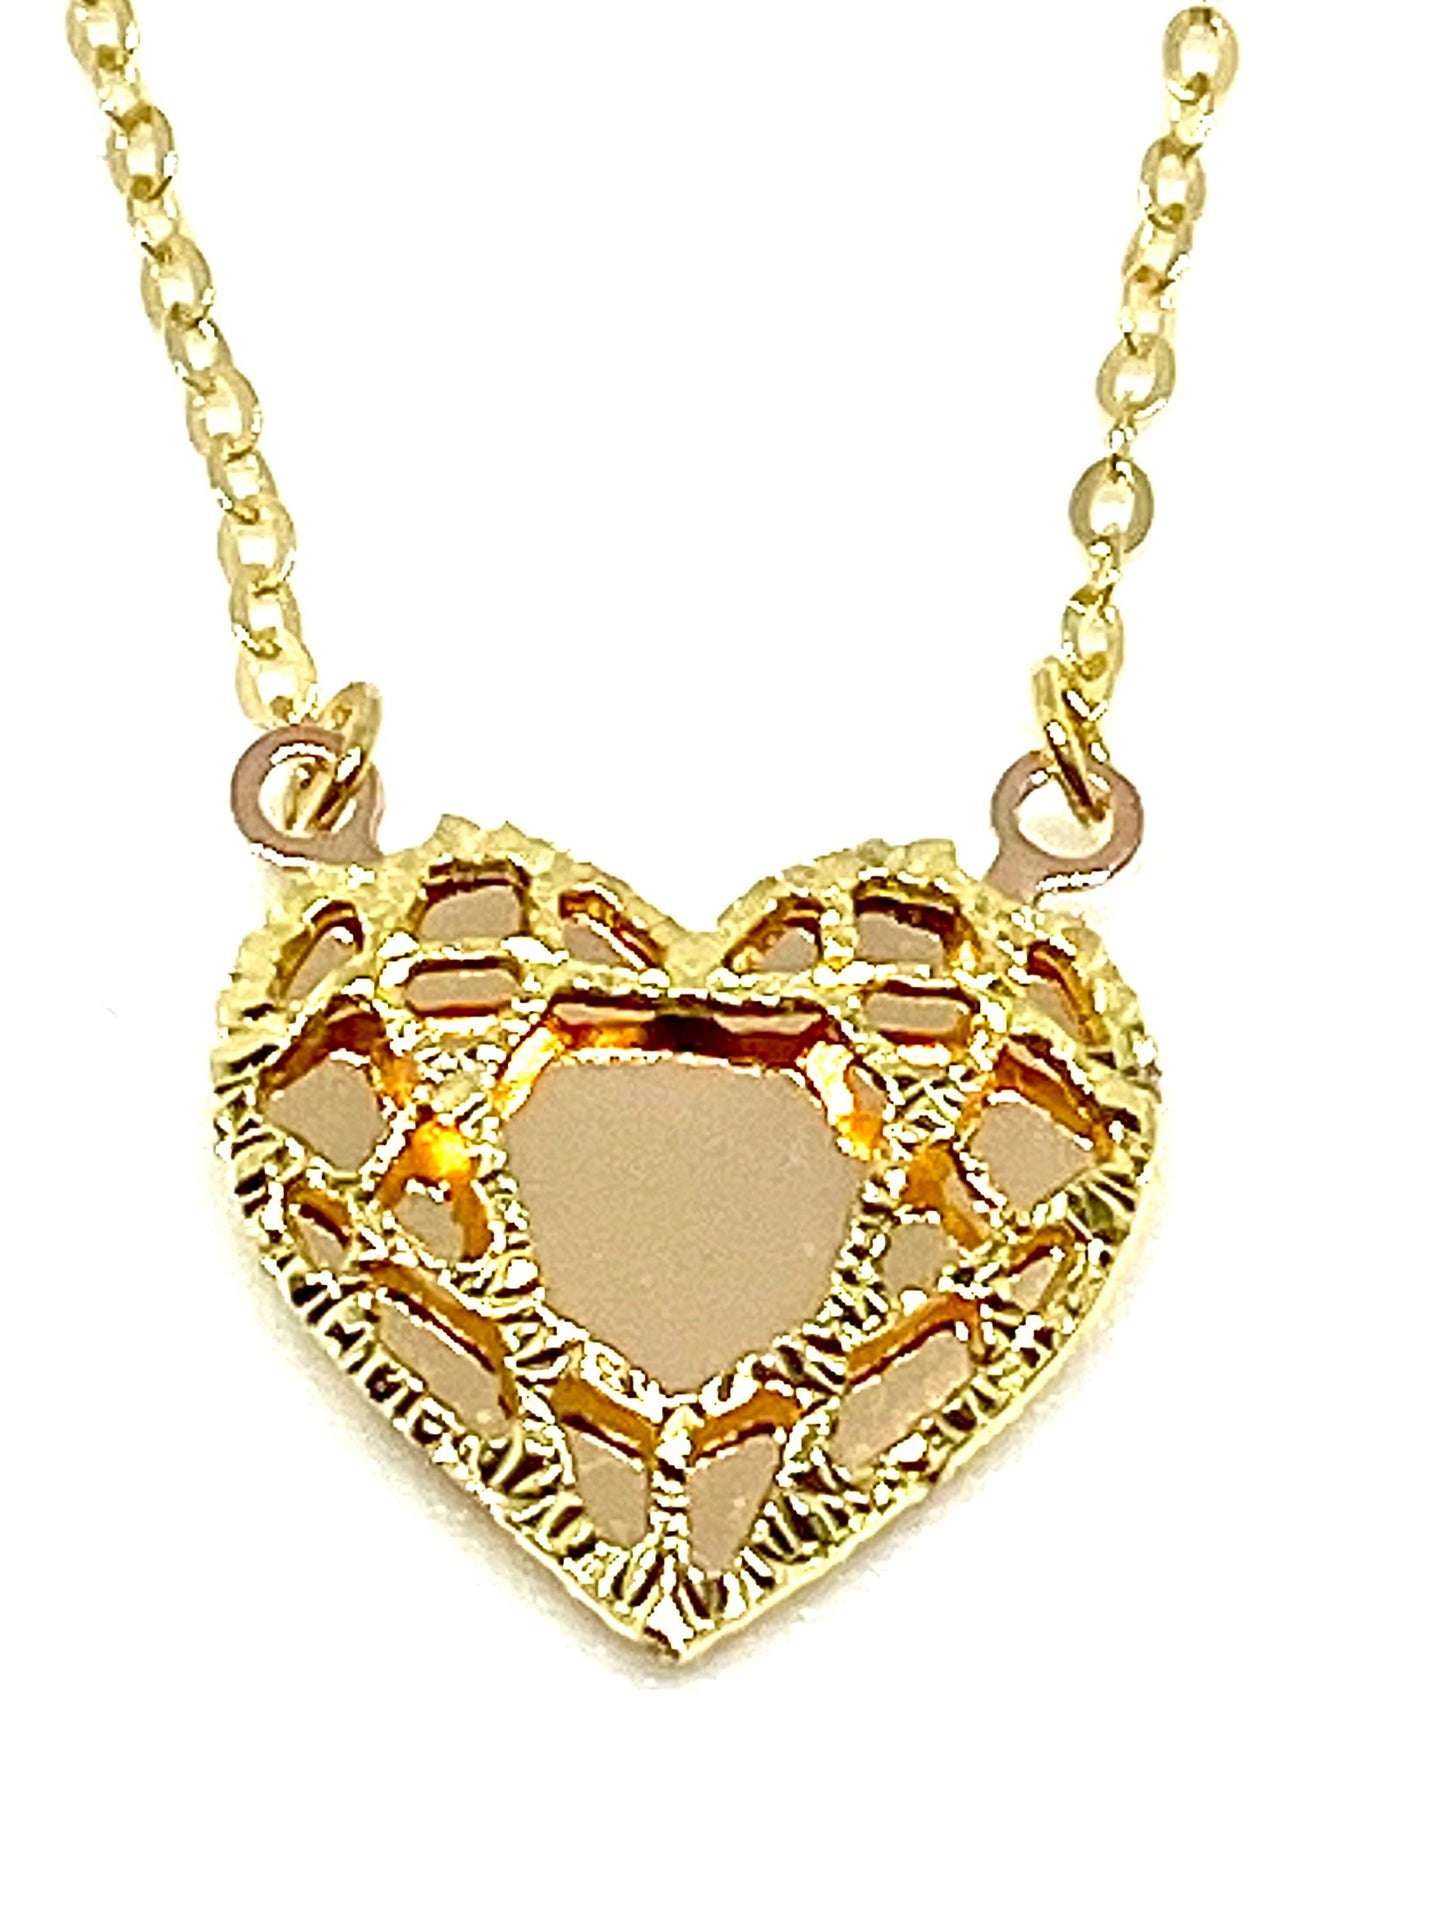 Yellow Gold High Polish Filigree Heart Pendant Chain Necklace